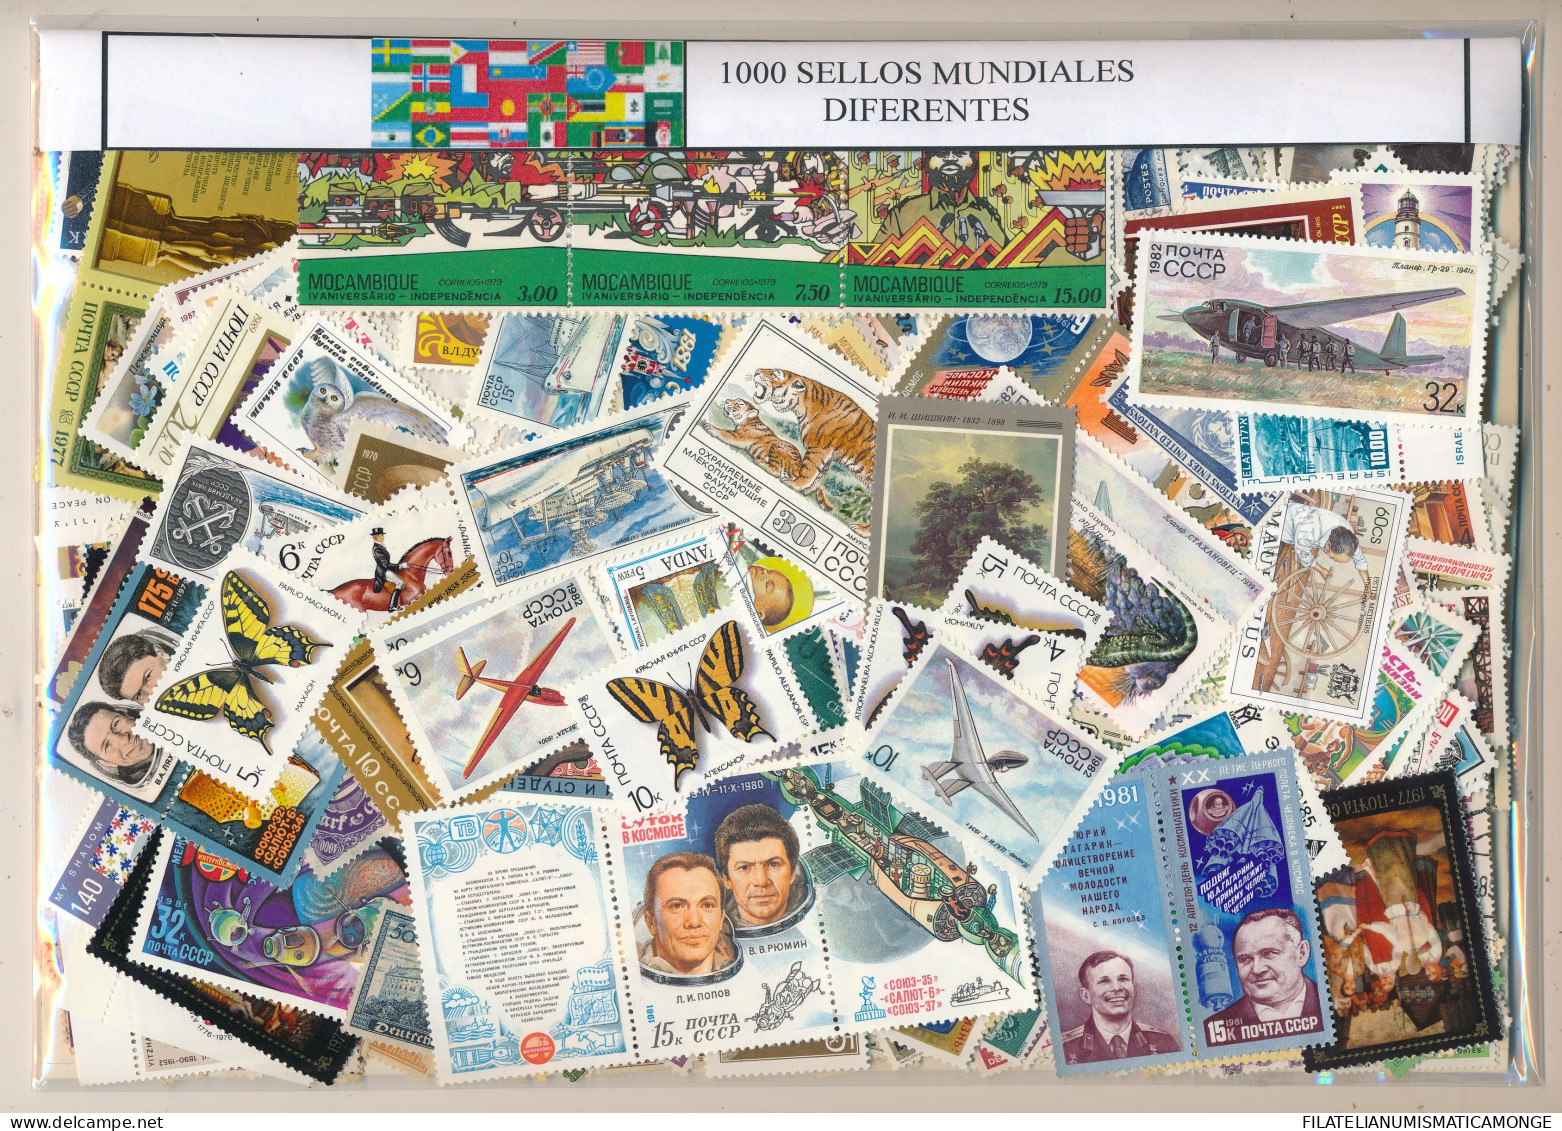  Offer - Lot Stamps - Paqueteria  Mundial 1000 Diferentes / Especial / Elegante - Lots & Kiloware (mixtures) - Min. 1000 Stamps